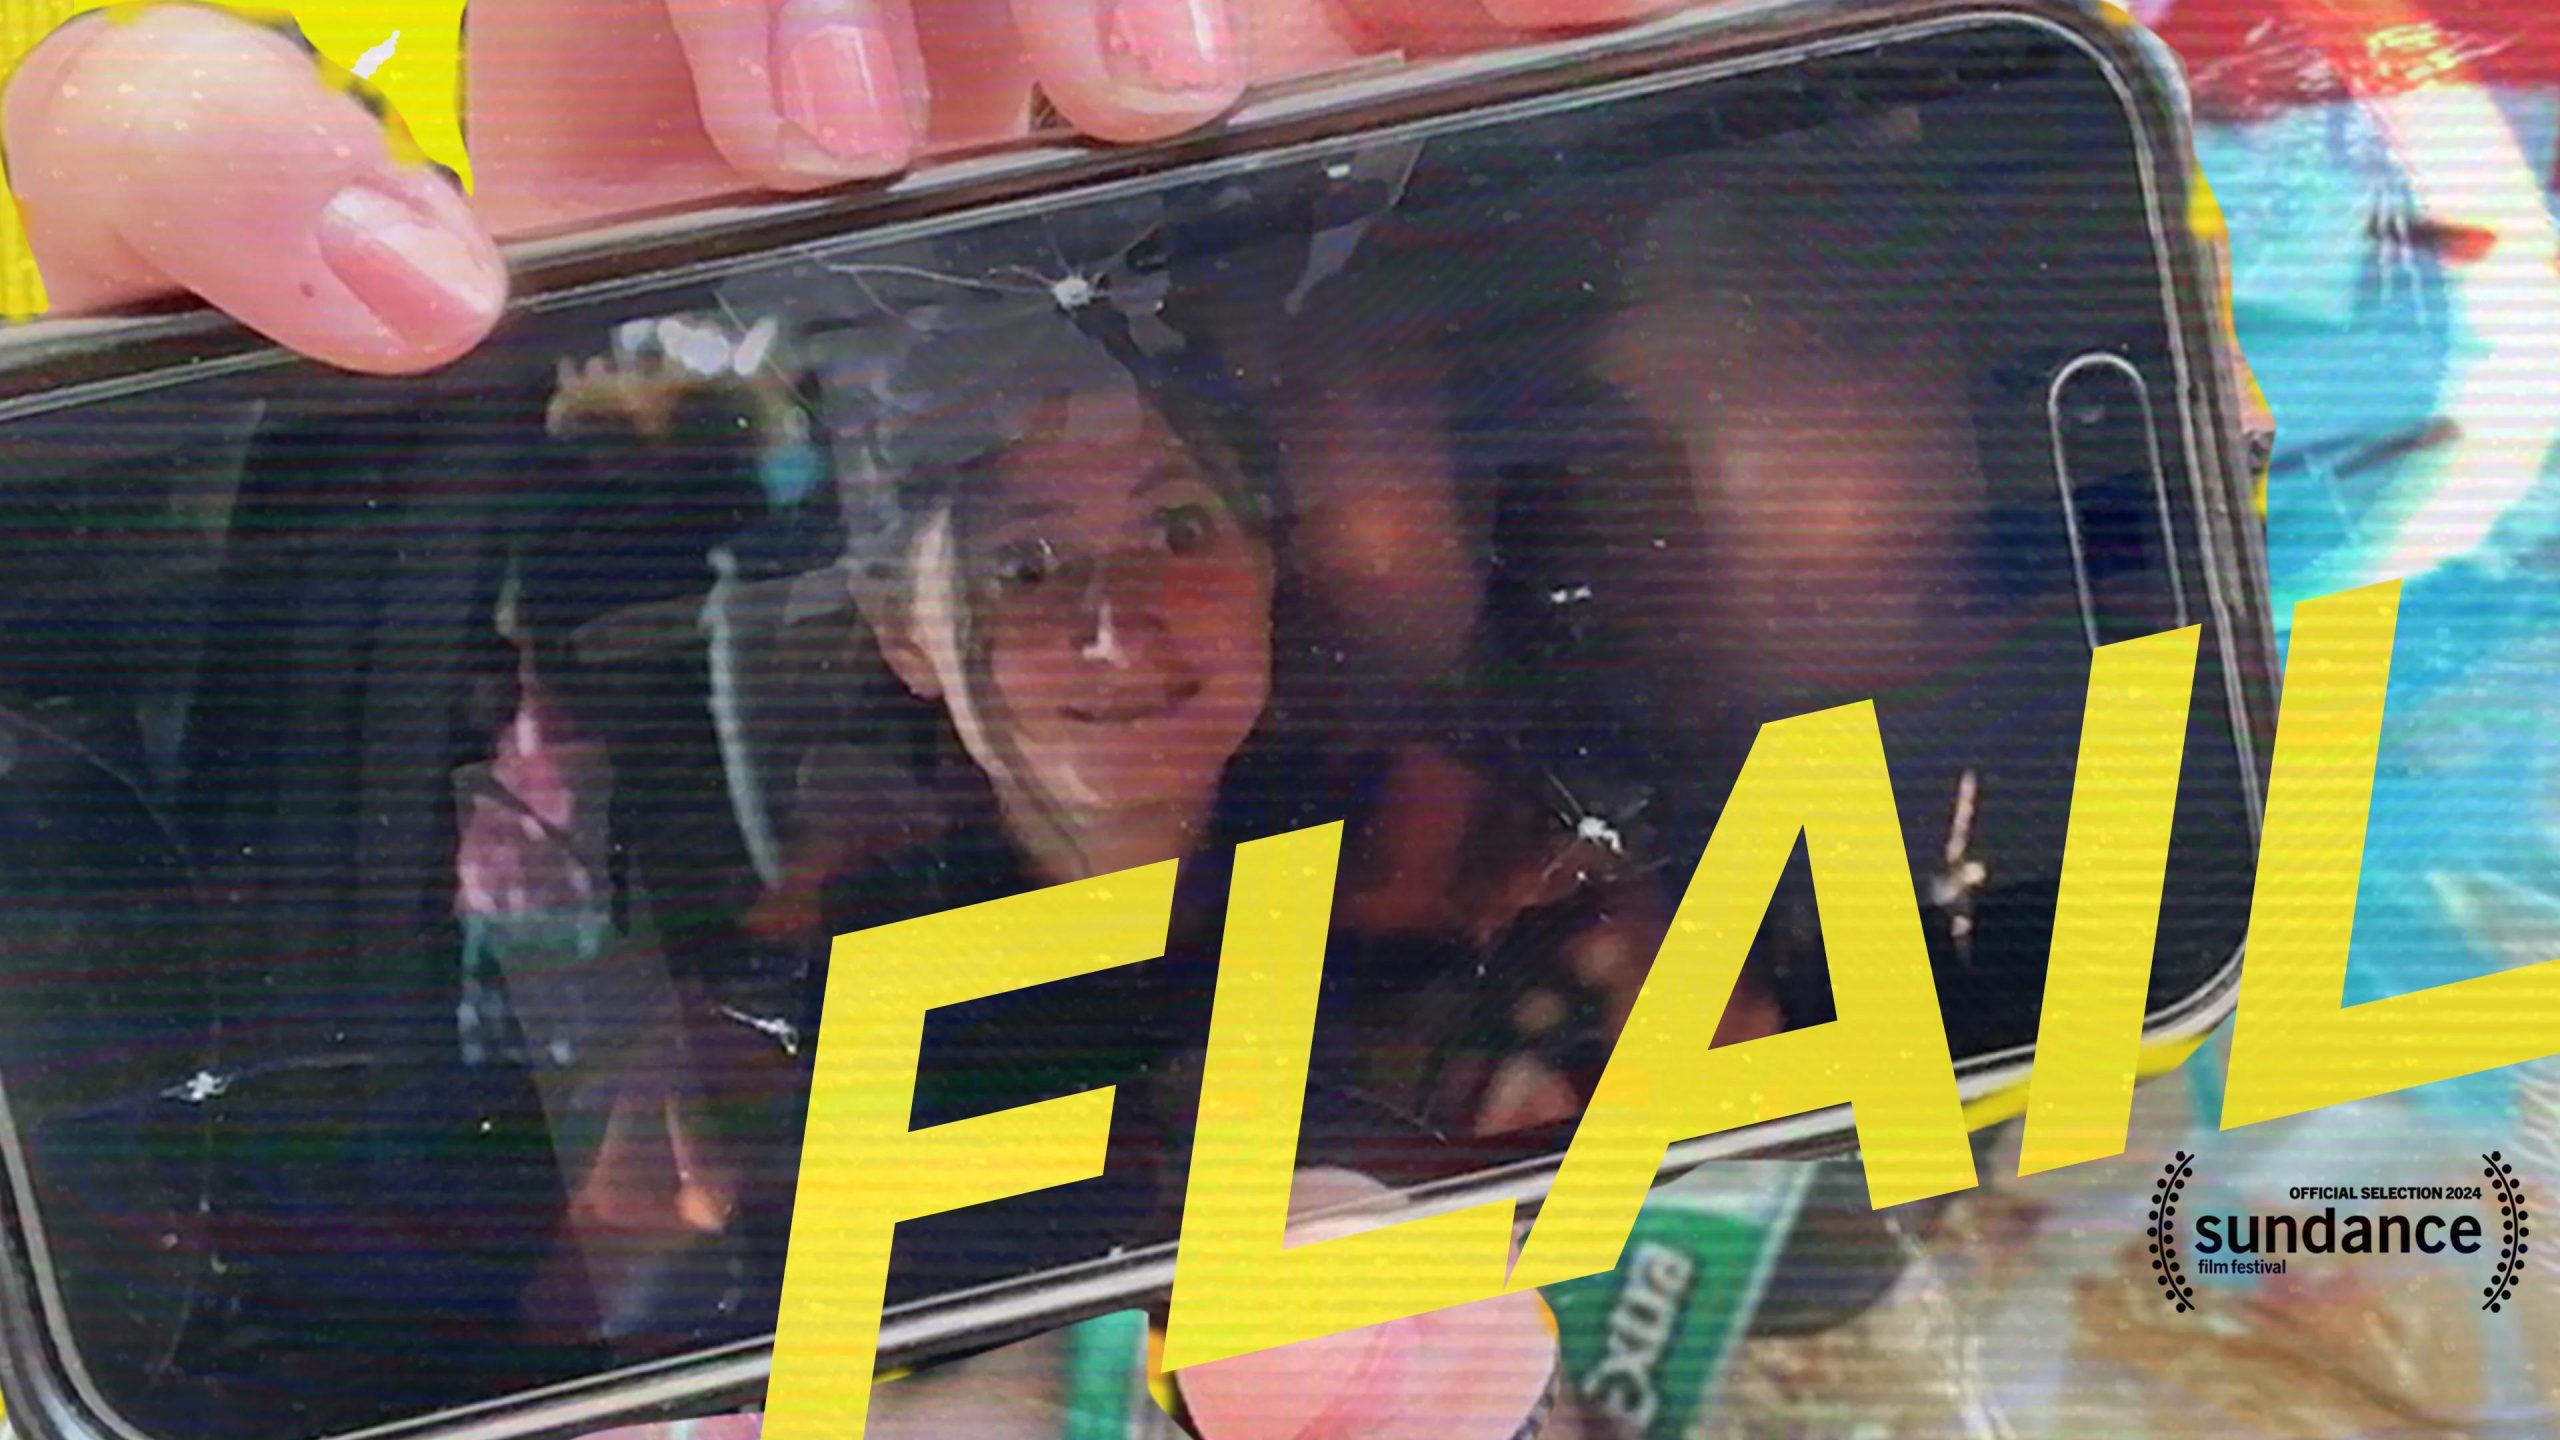 FLAIL on Vimeo [Video]